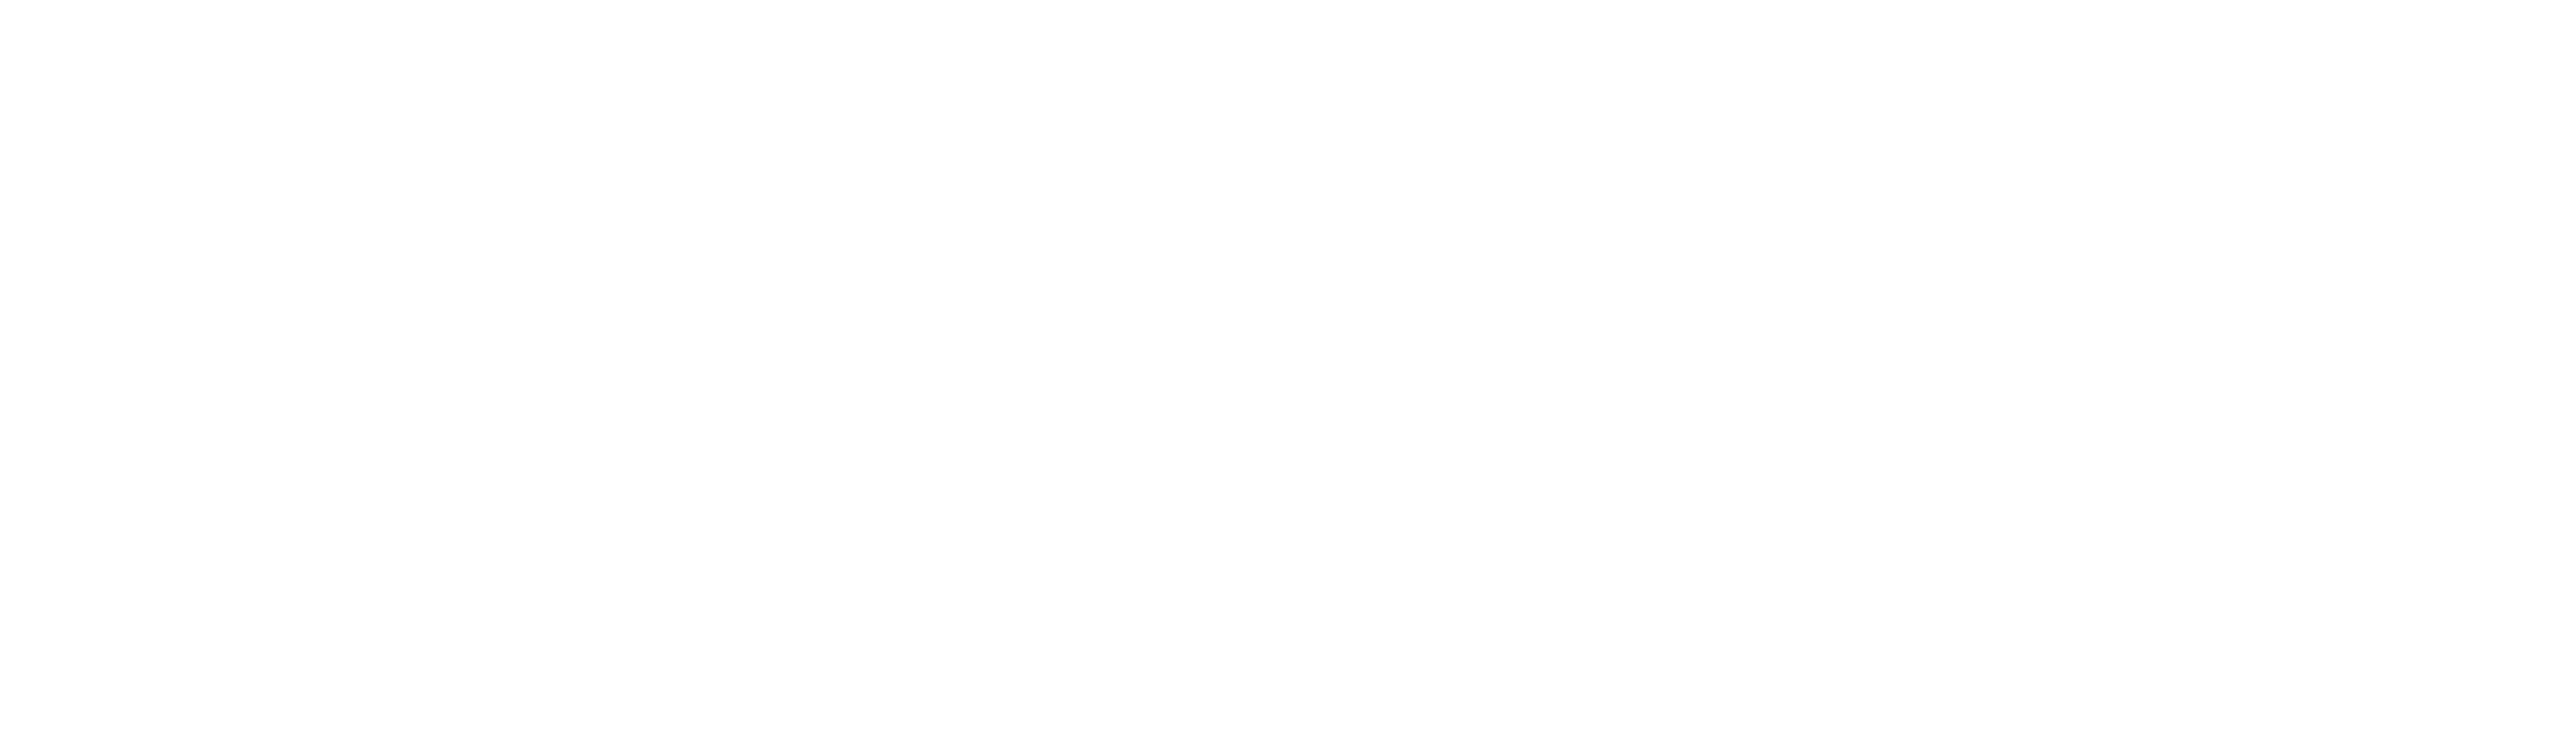 Screen Incentives Logo